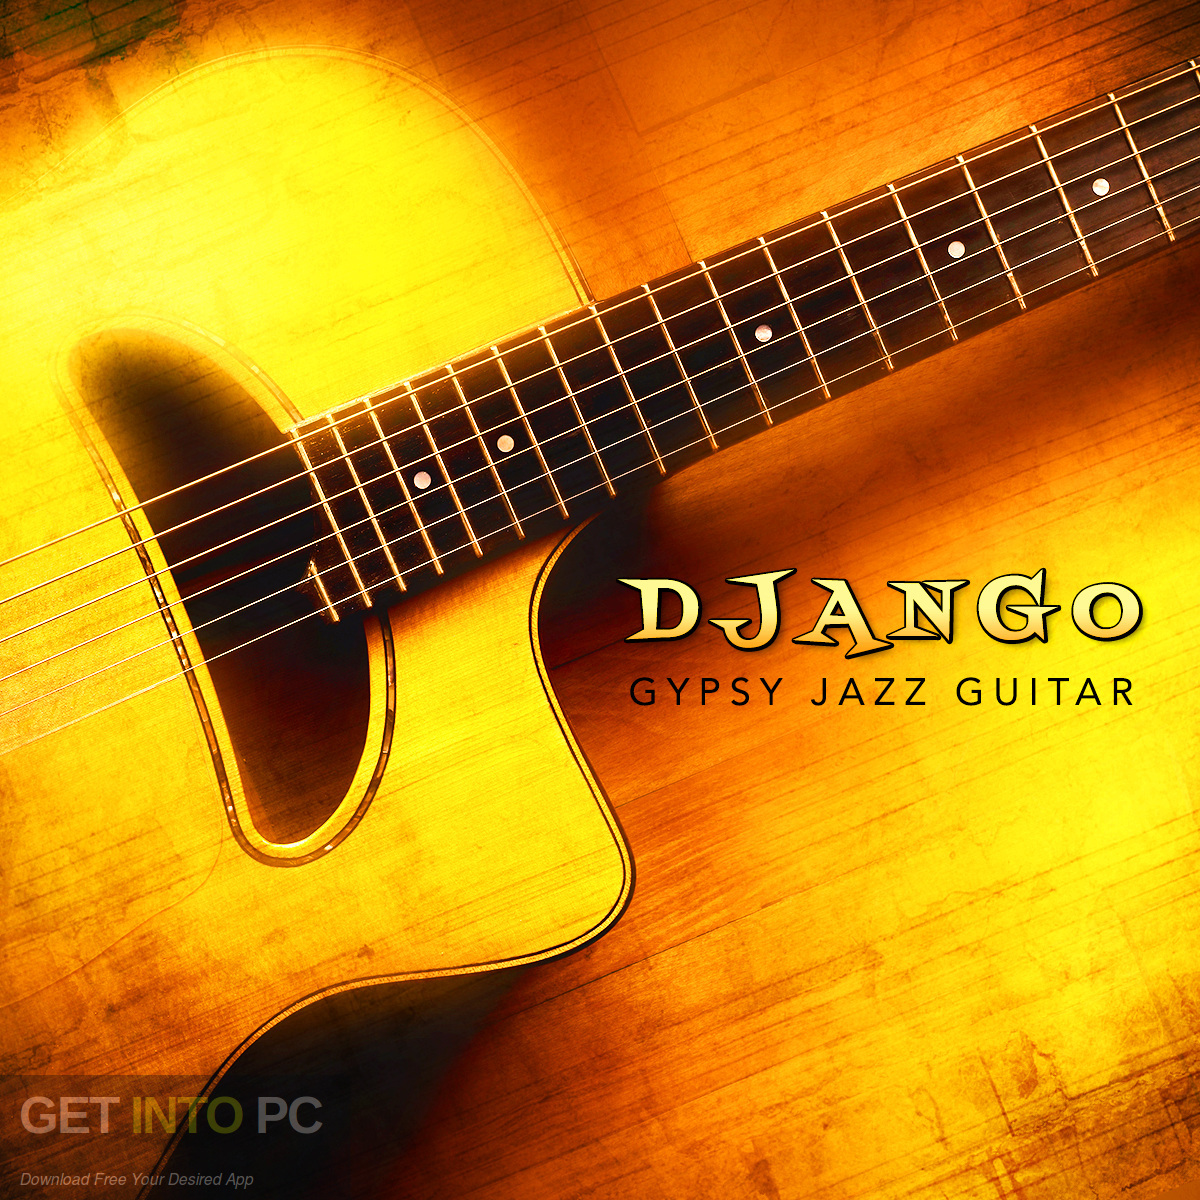 Django Gypsy Jazz Guitar (KONTAKT) Free Download-GetintoPC.com